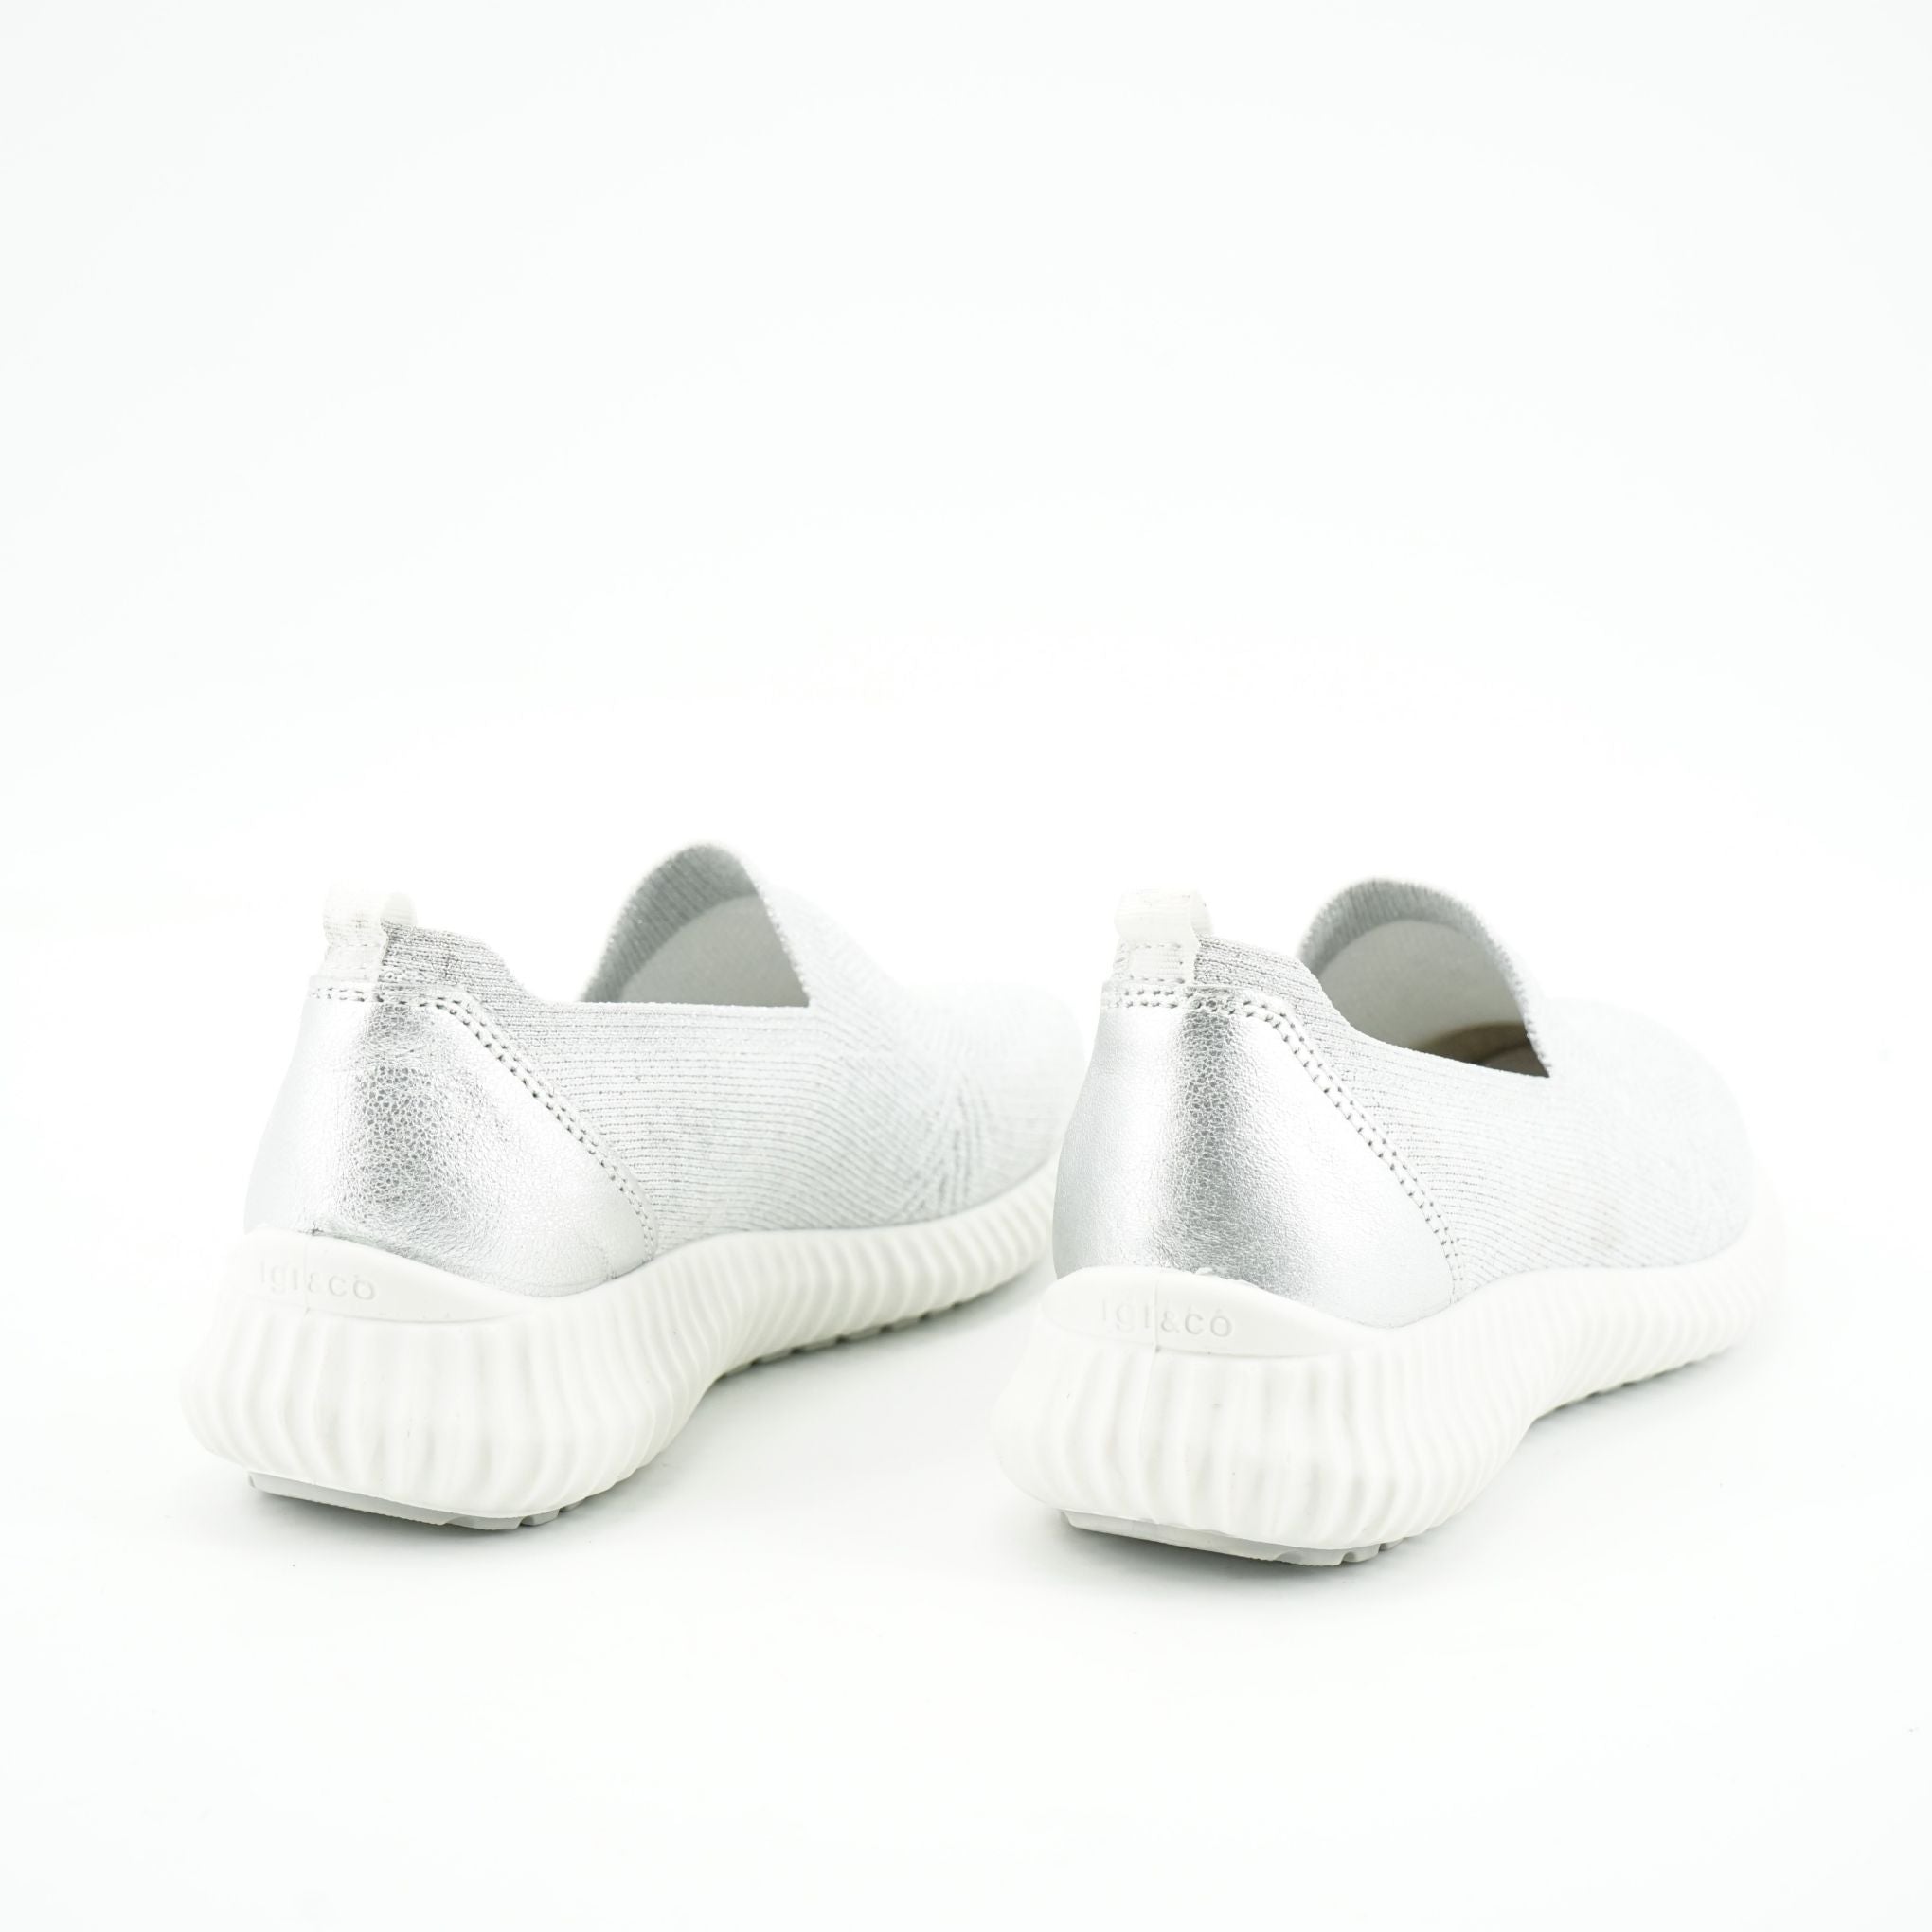 Sneakers slip on IGI&CO in tessuto elastico: 3662000